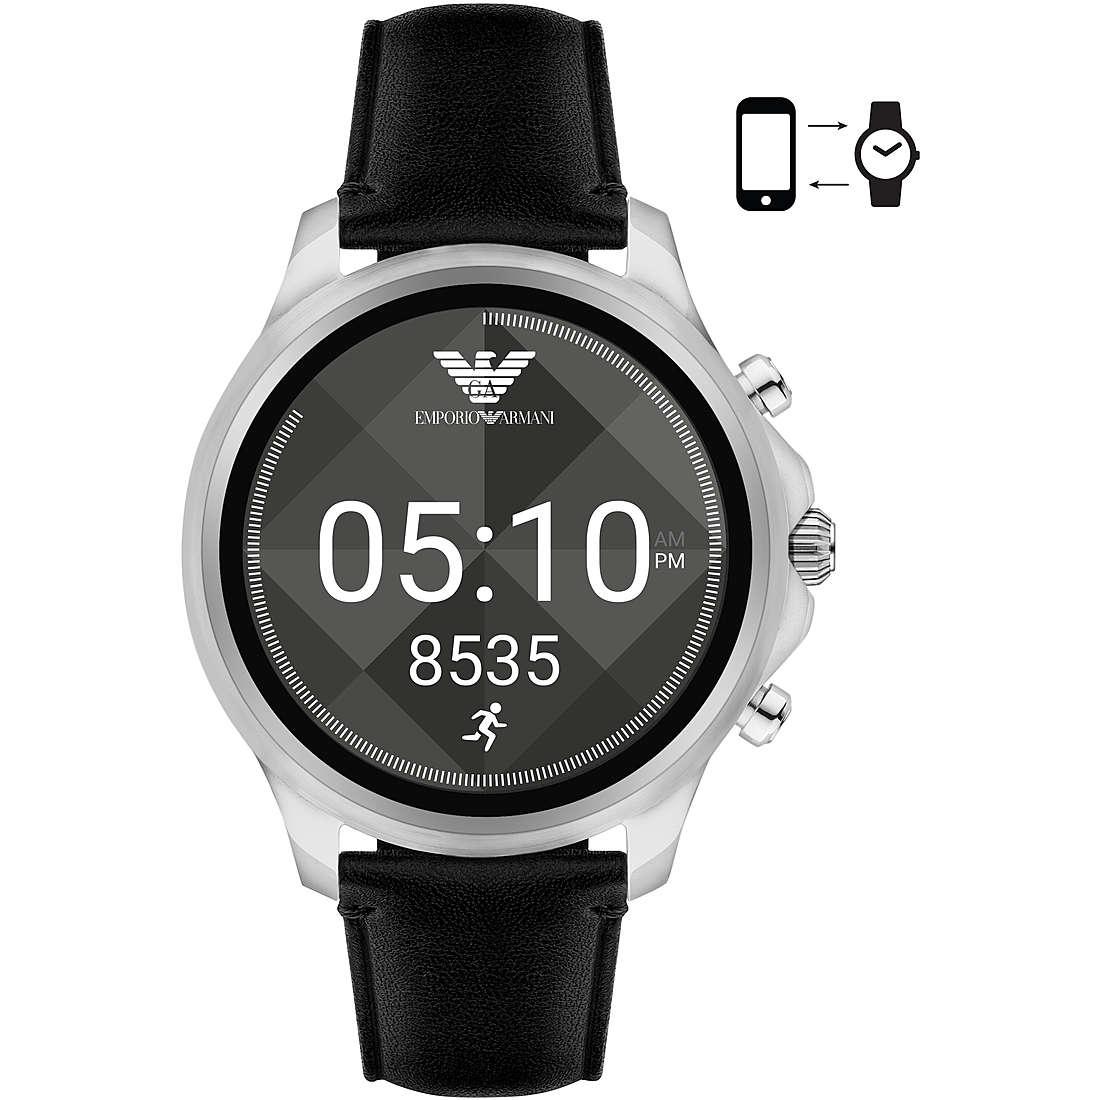 Watches: Armani watch Smartwatch digital man leather strap model ART5003